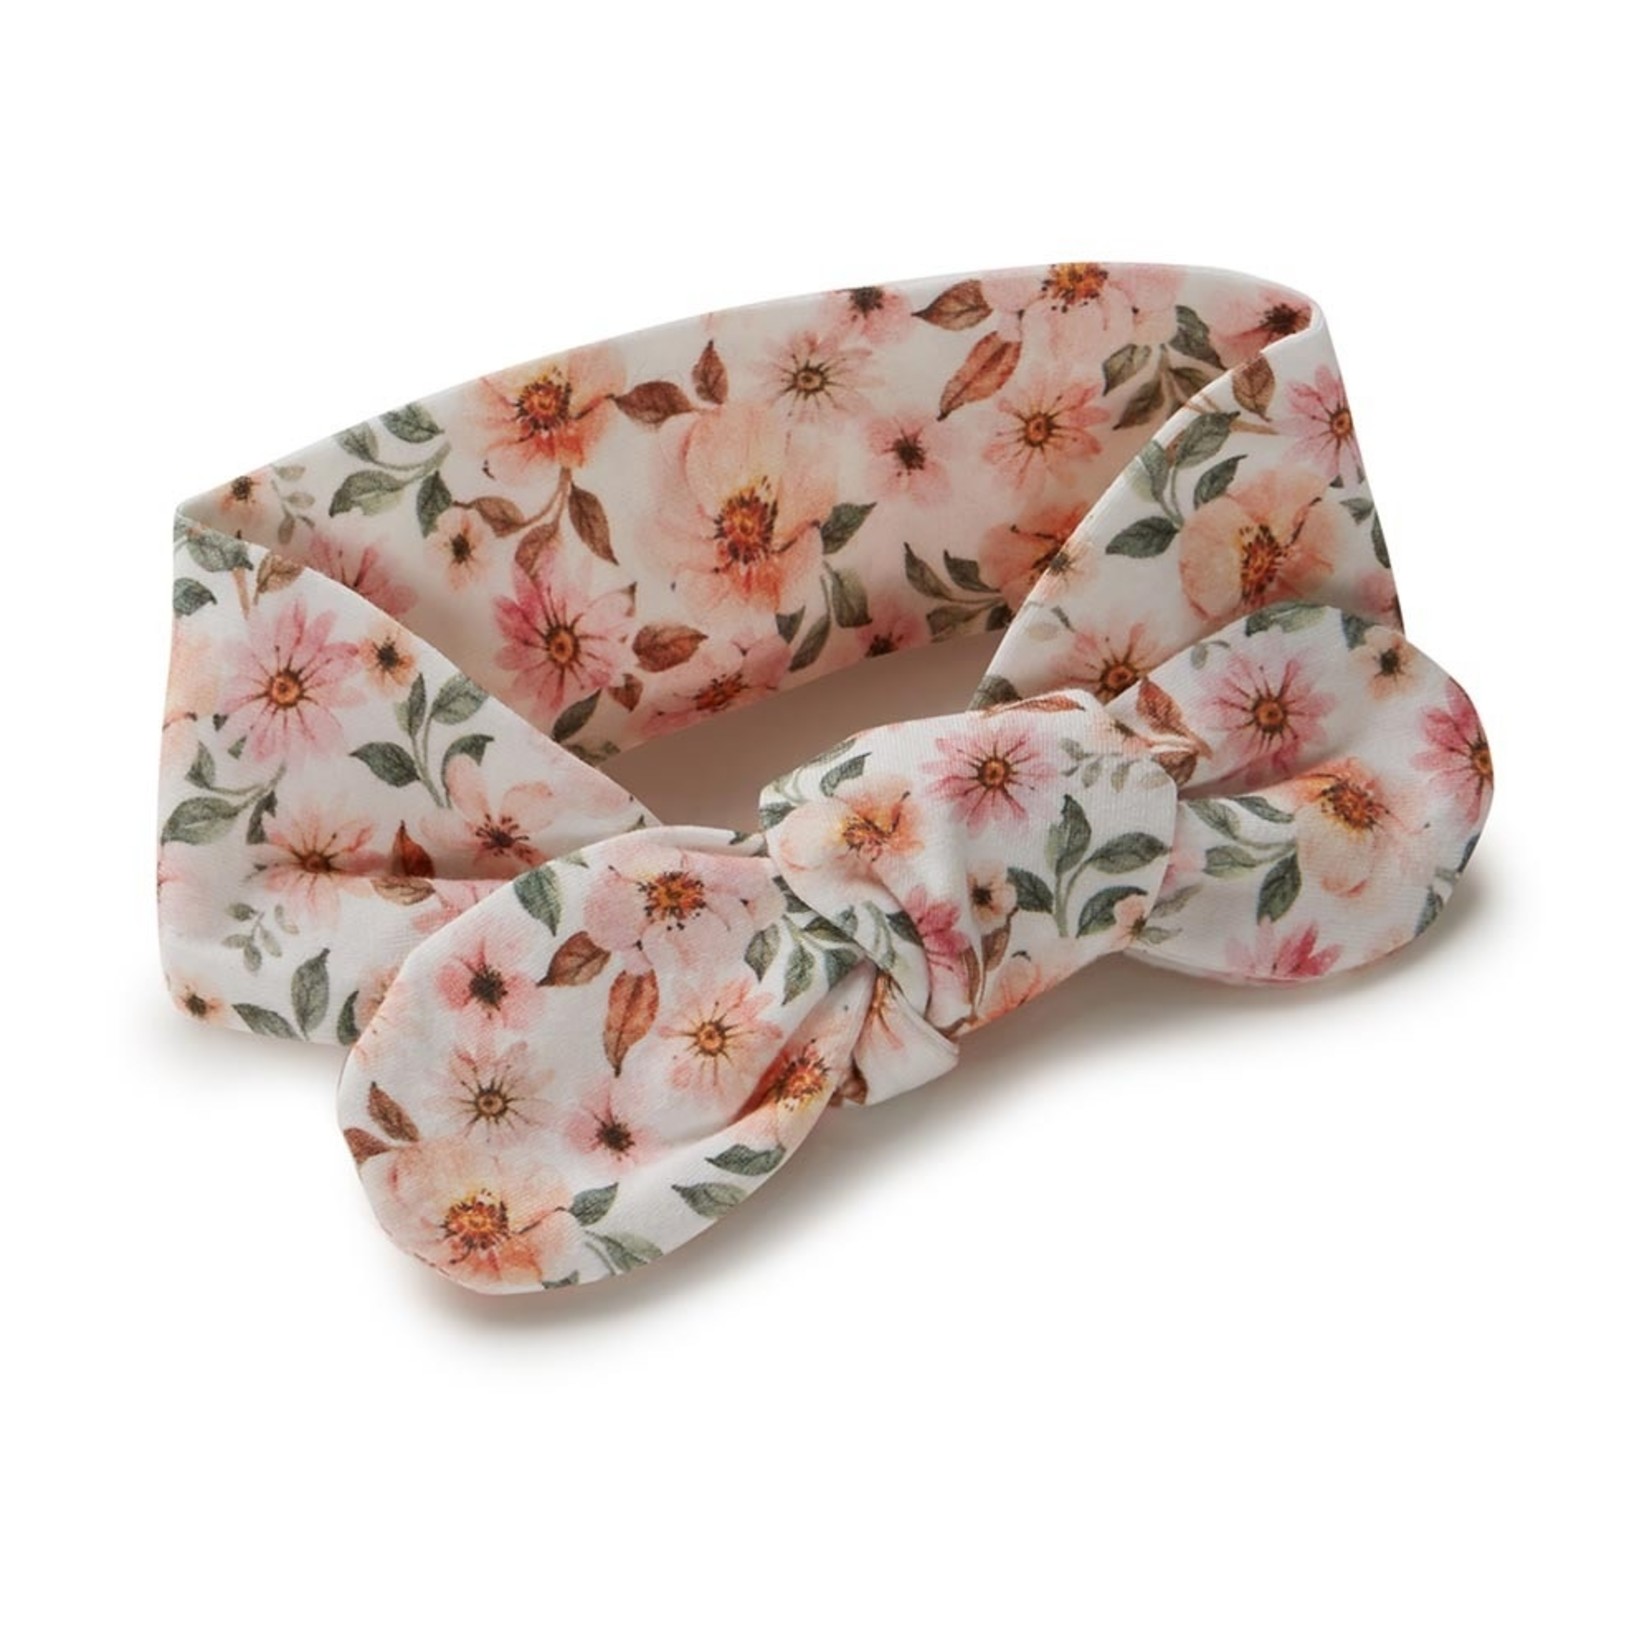 Snuggle Hunny Snuggle Swaddle & Topknot Set-Spring Floral